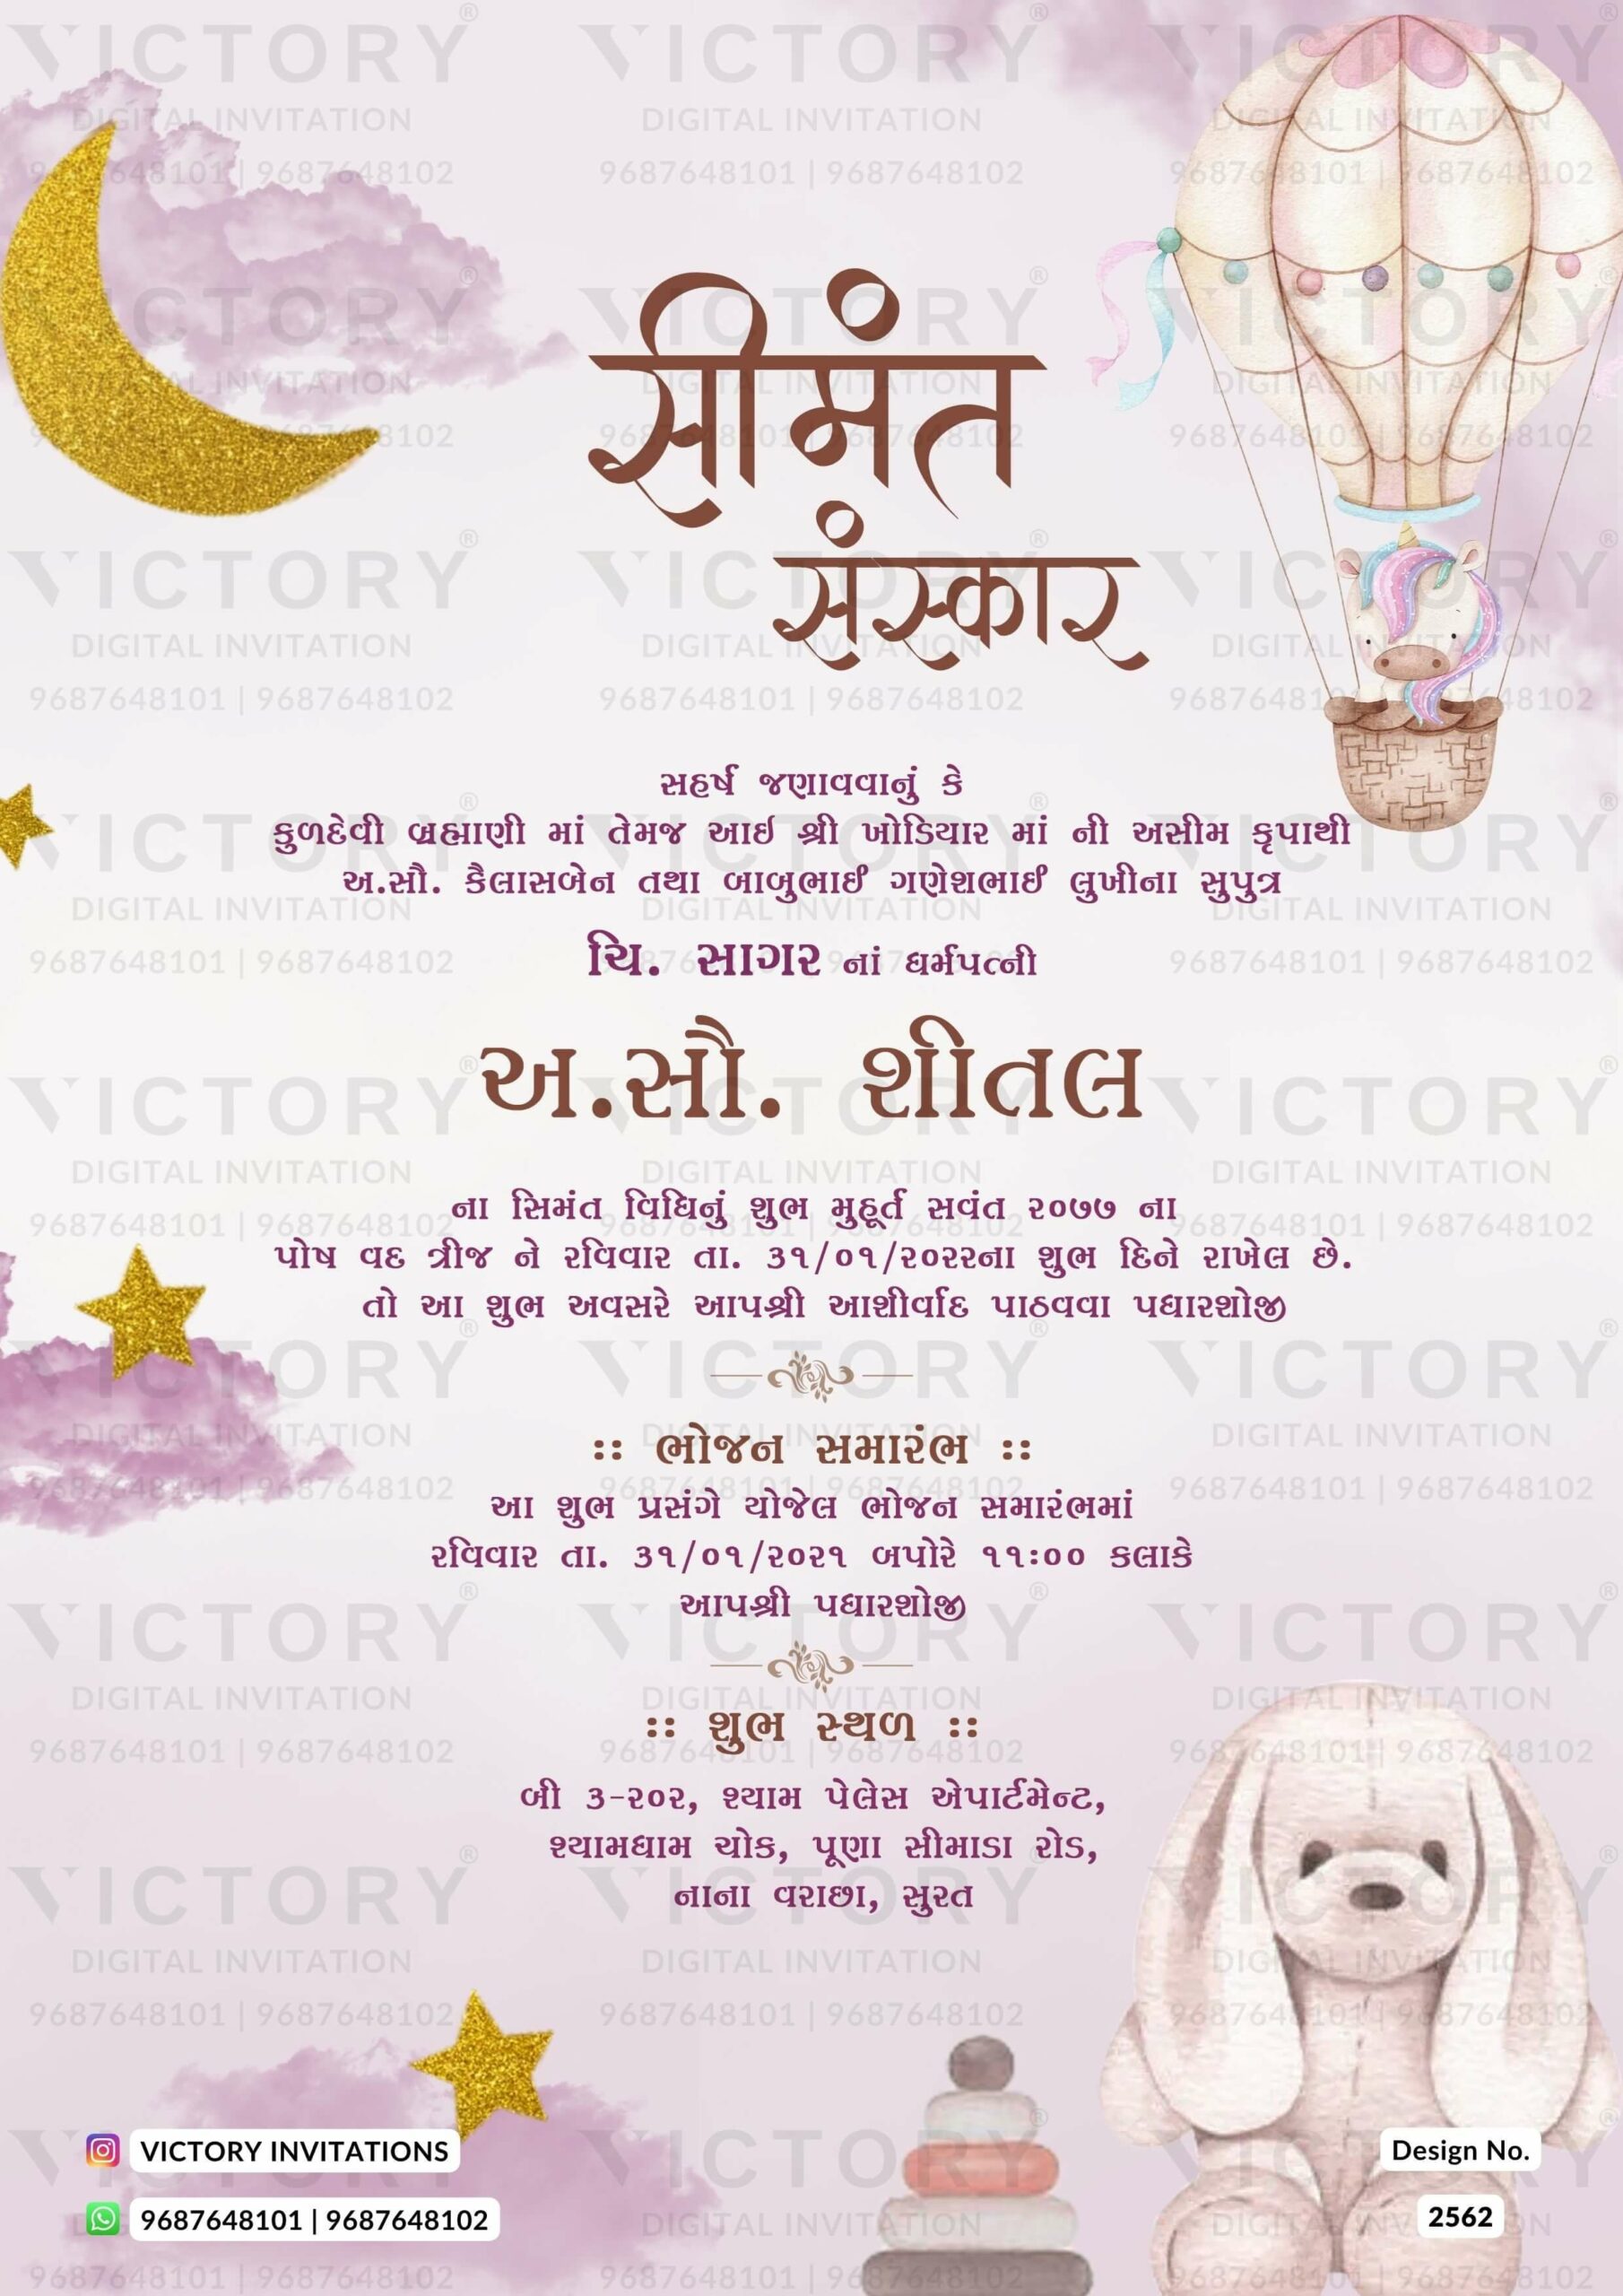 Adventure theme Simant Vidhi baby shower digital invitation card in Gujarati language, design 2562